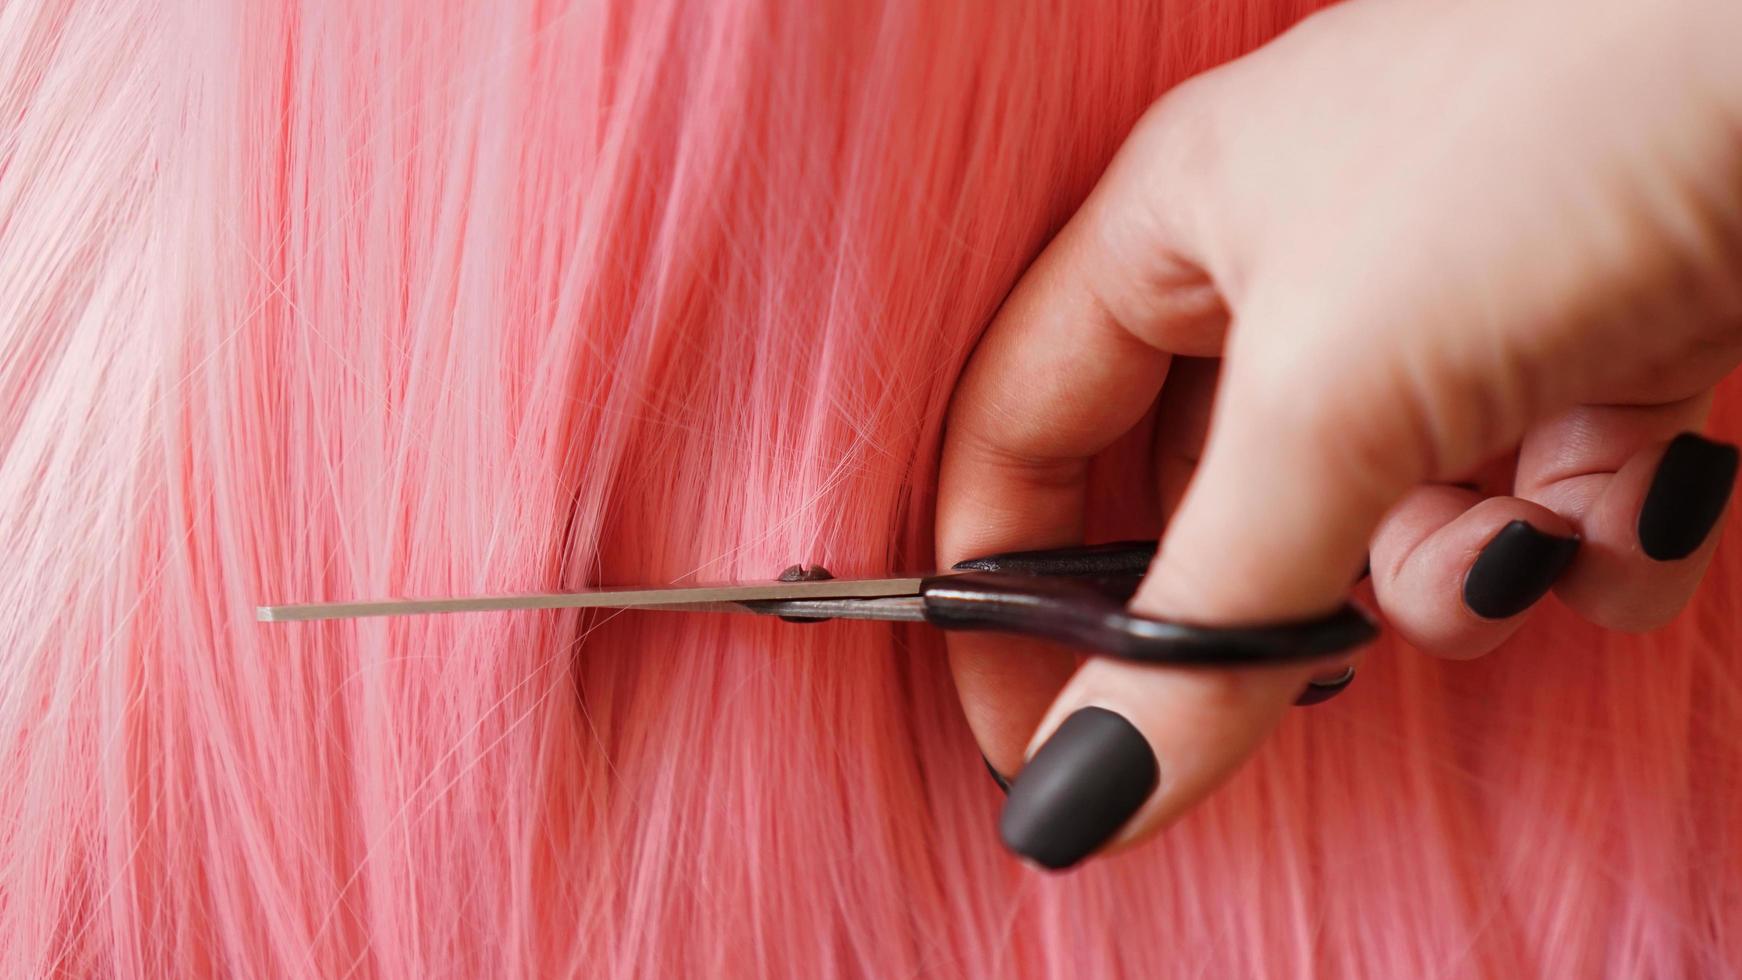 peruk och sax - rosa peruk - frisyrbakgrund foto